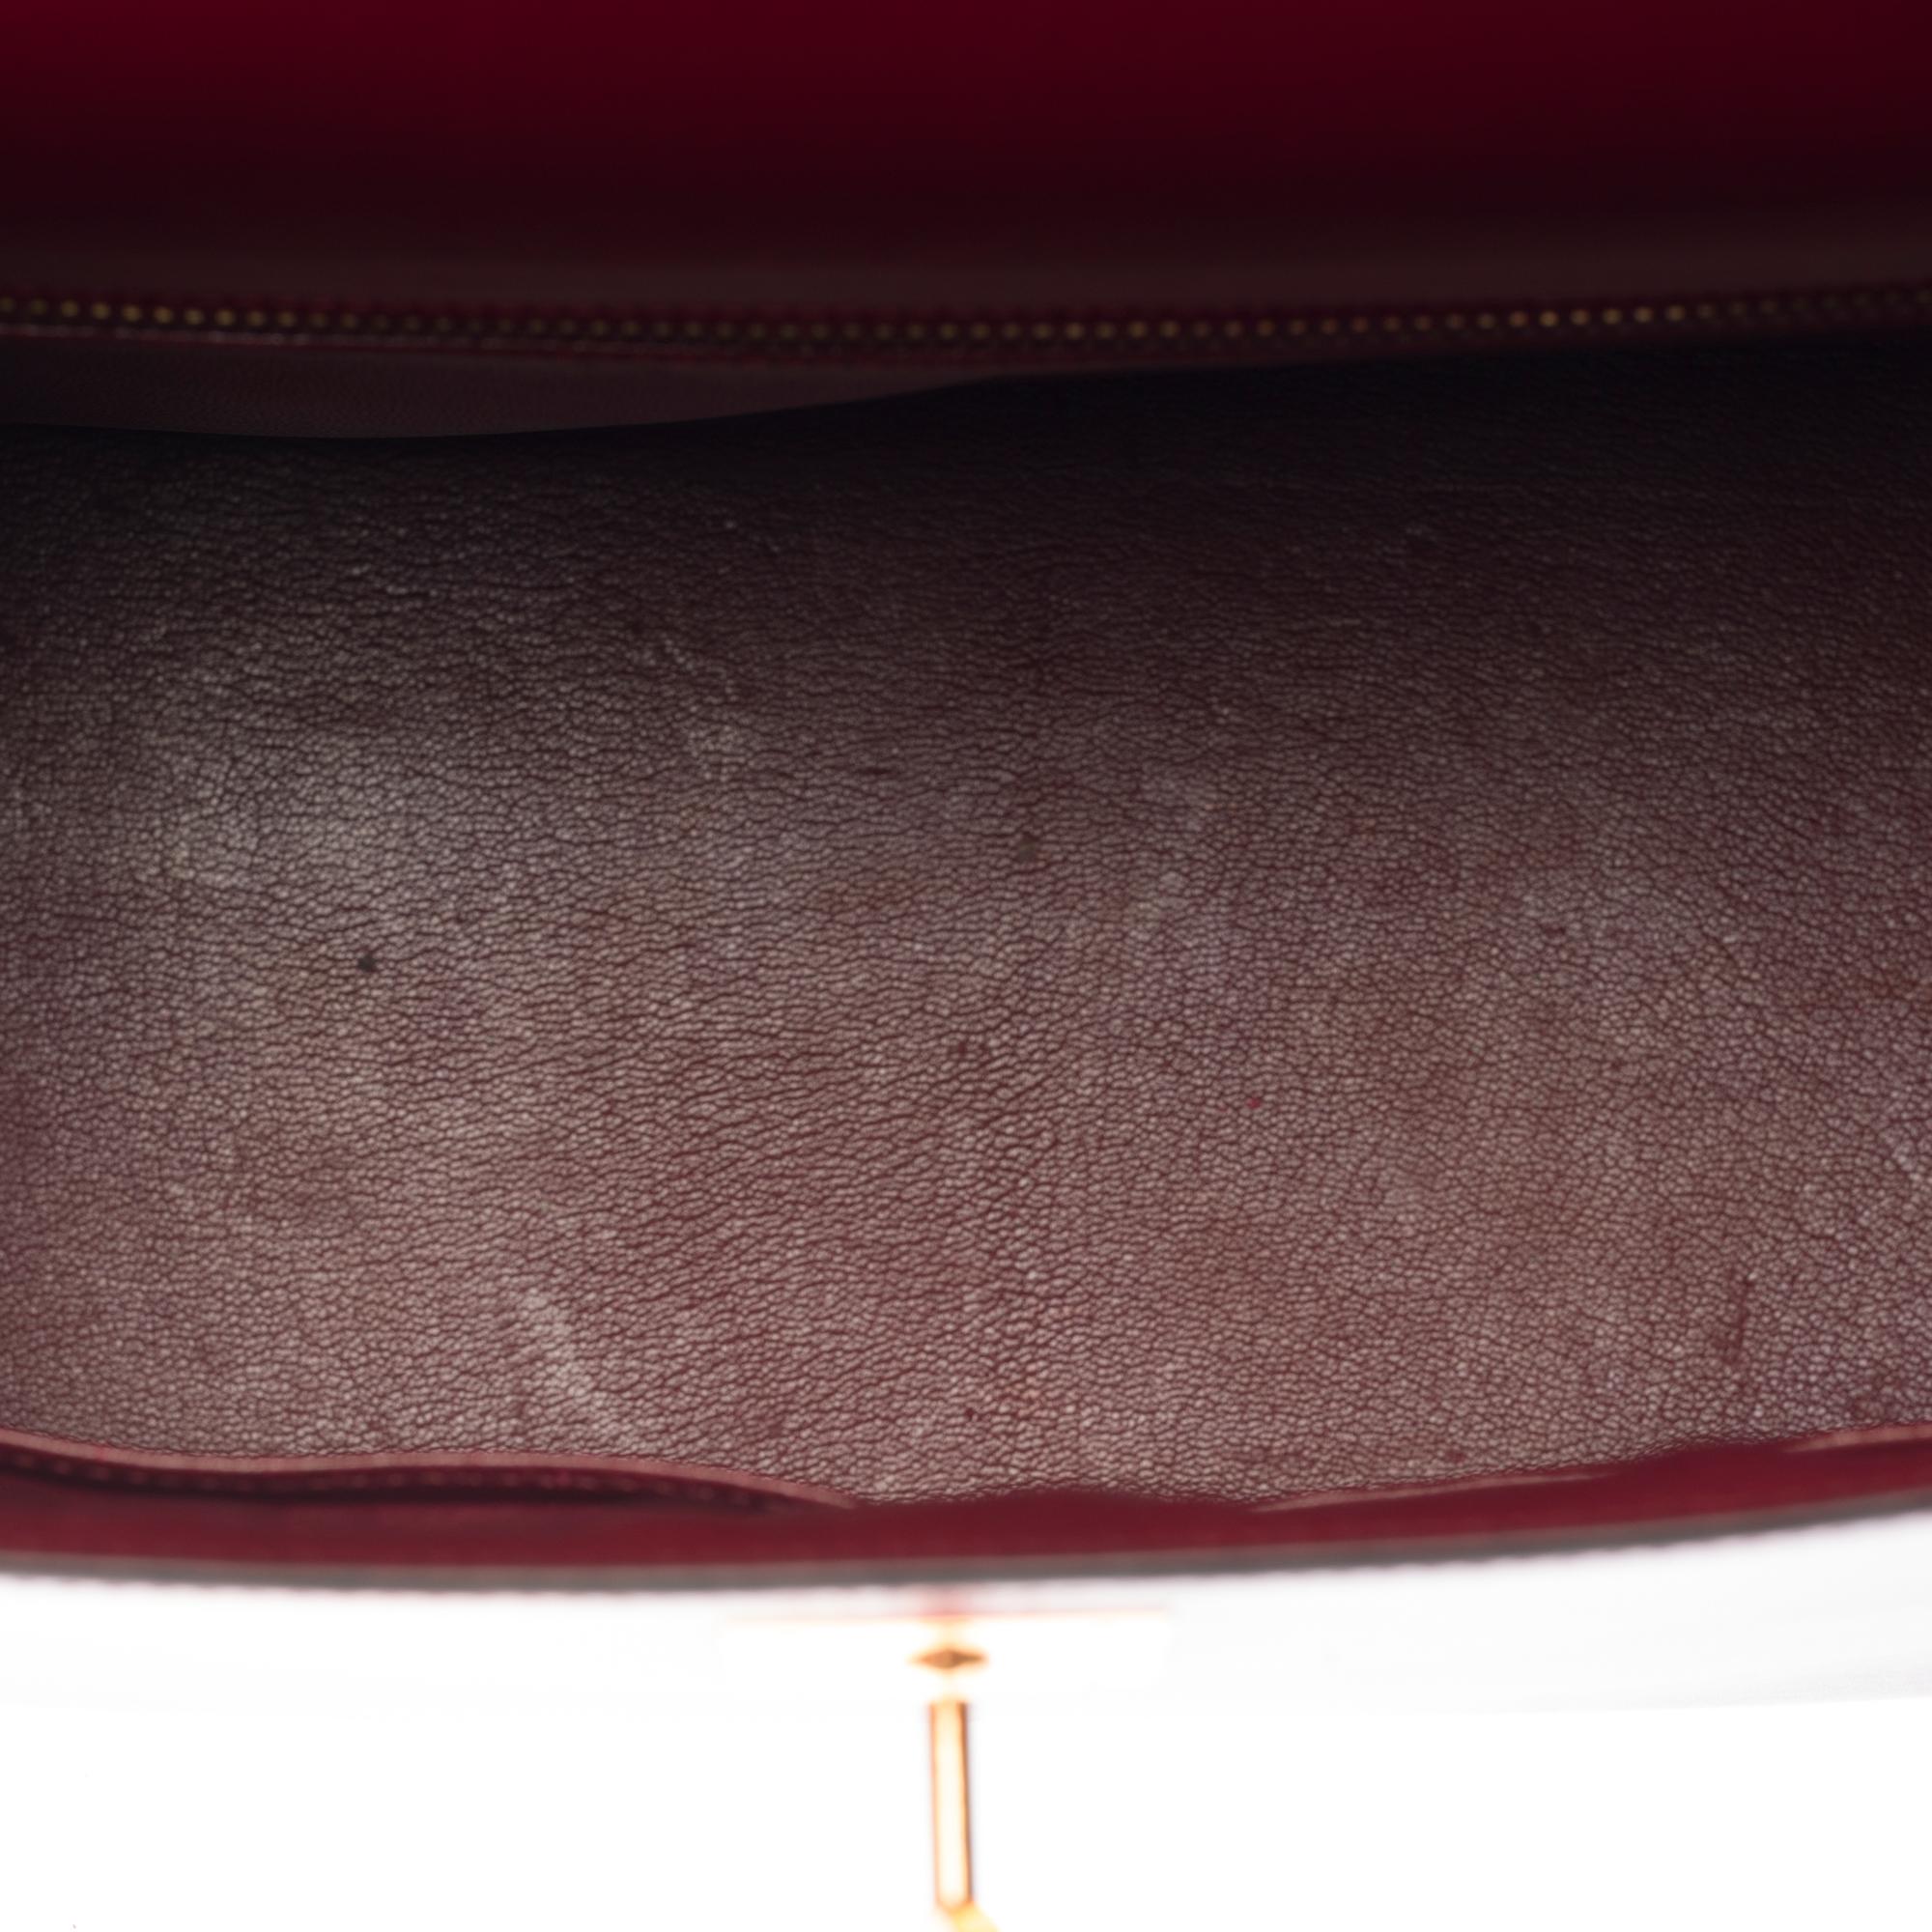 Hermès Kelly 35 sellier strap shoulder bag in burgundy calf leather, GHW 2